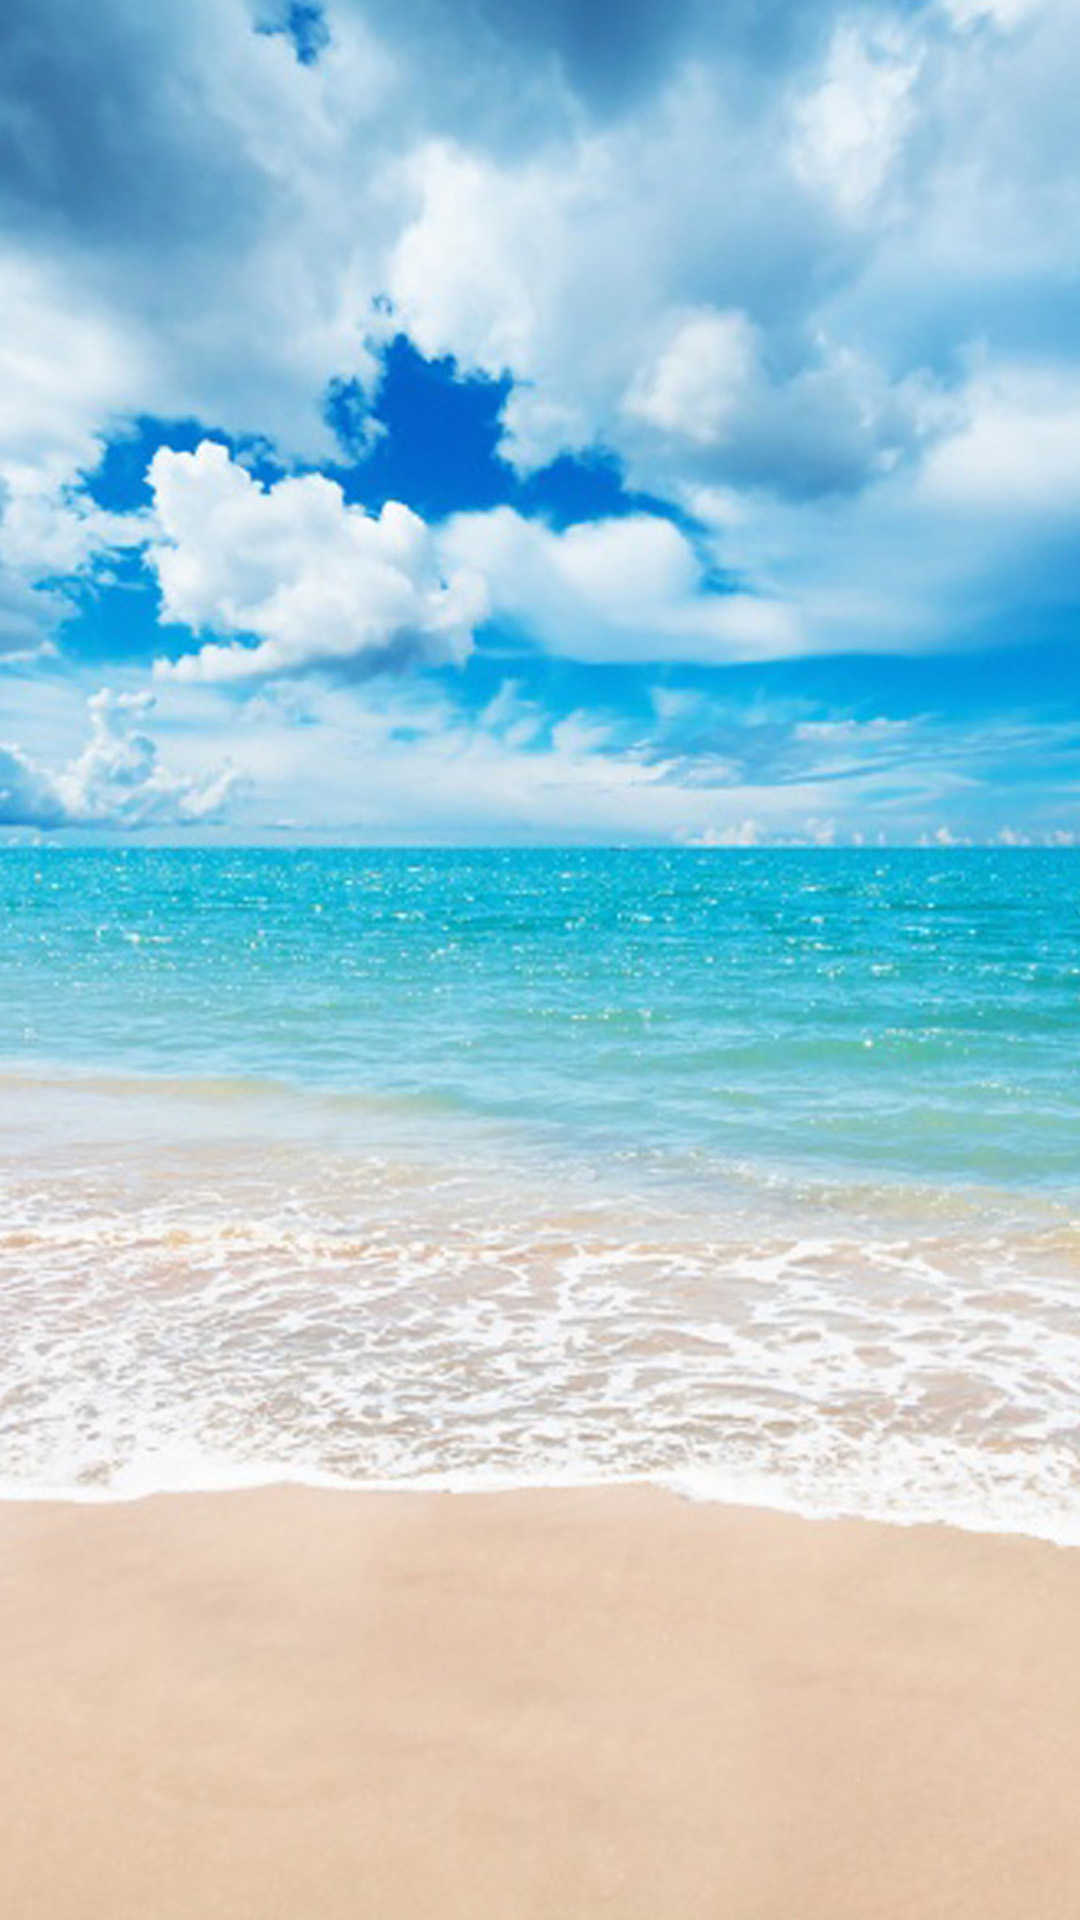 galerie de photos de fond d'écran,ciel,mer,océan,jour,bleu